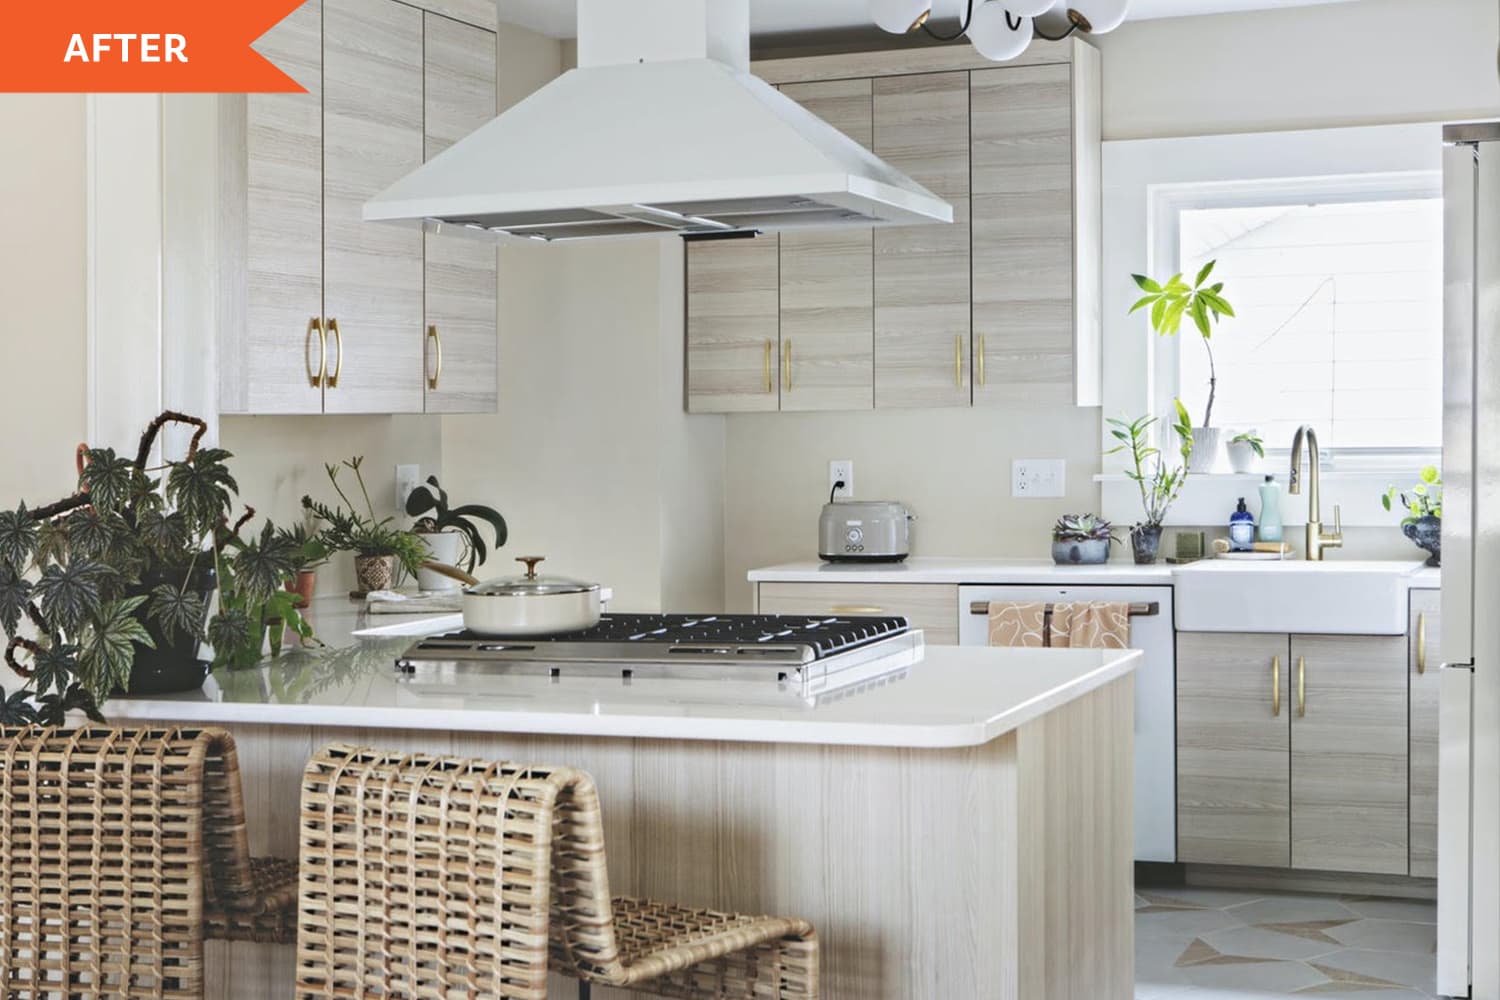 Kitchen Range Hood Options for Your Rentals - Rental Housing Journal